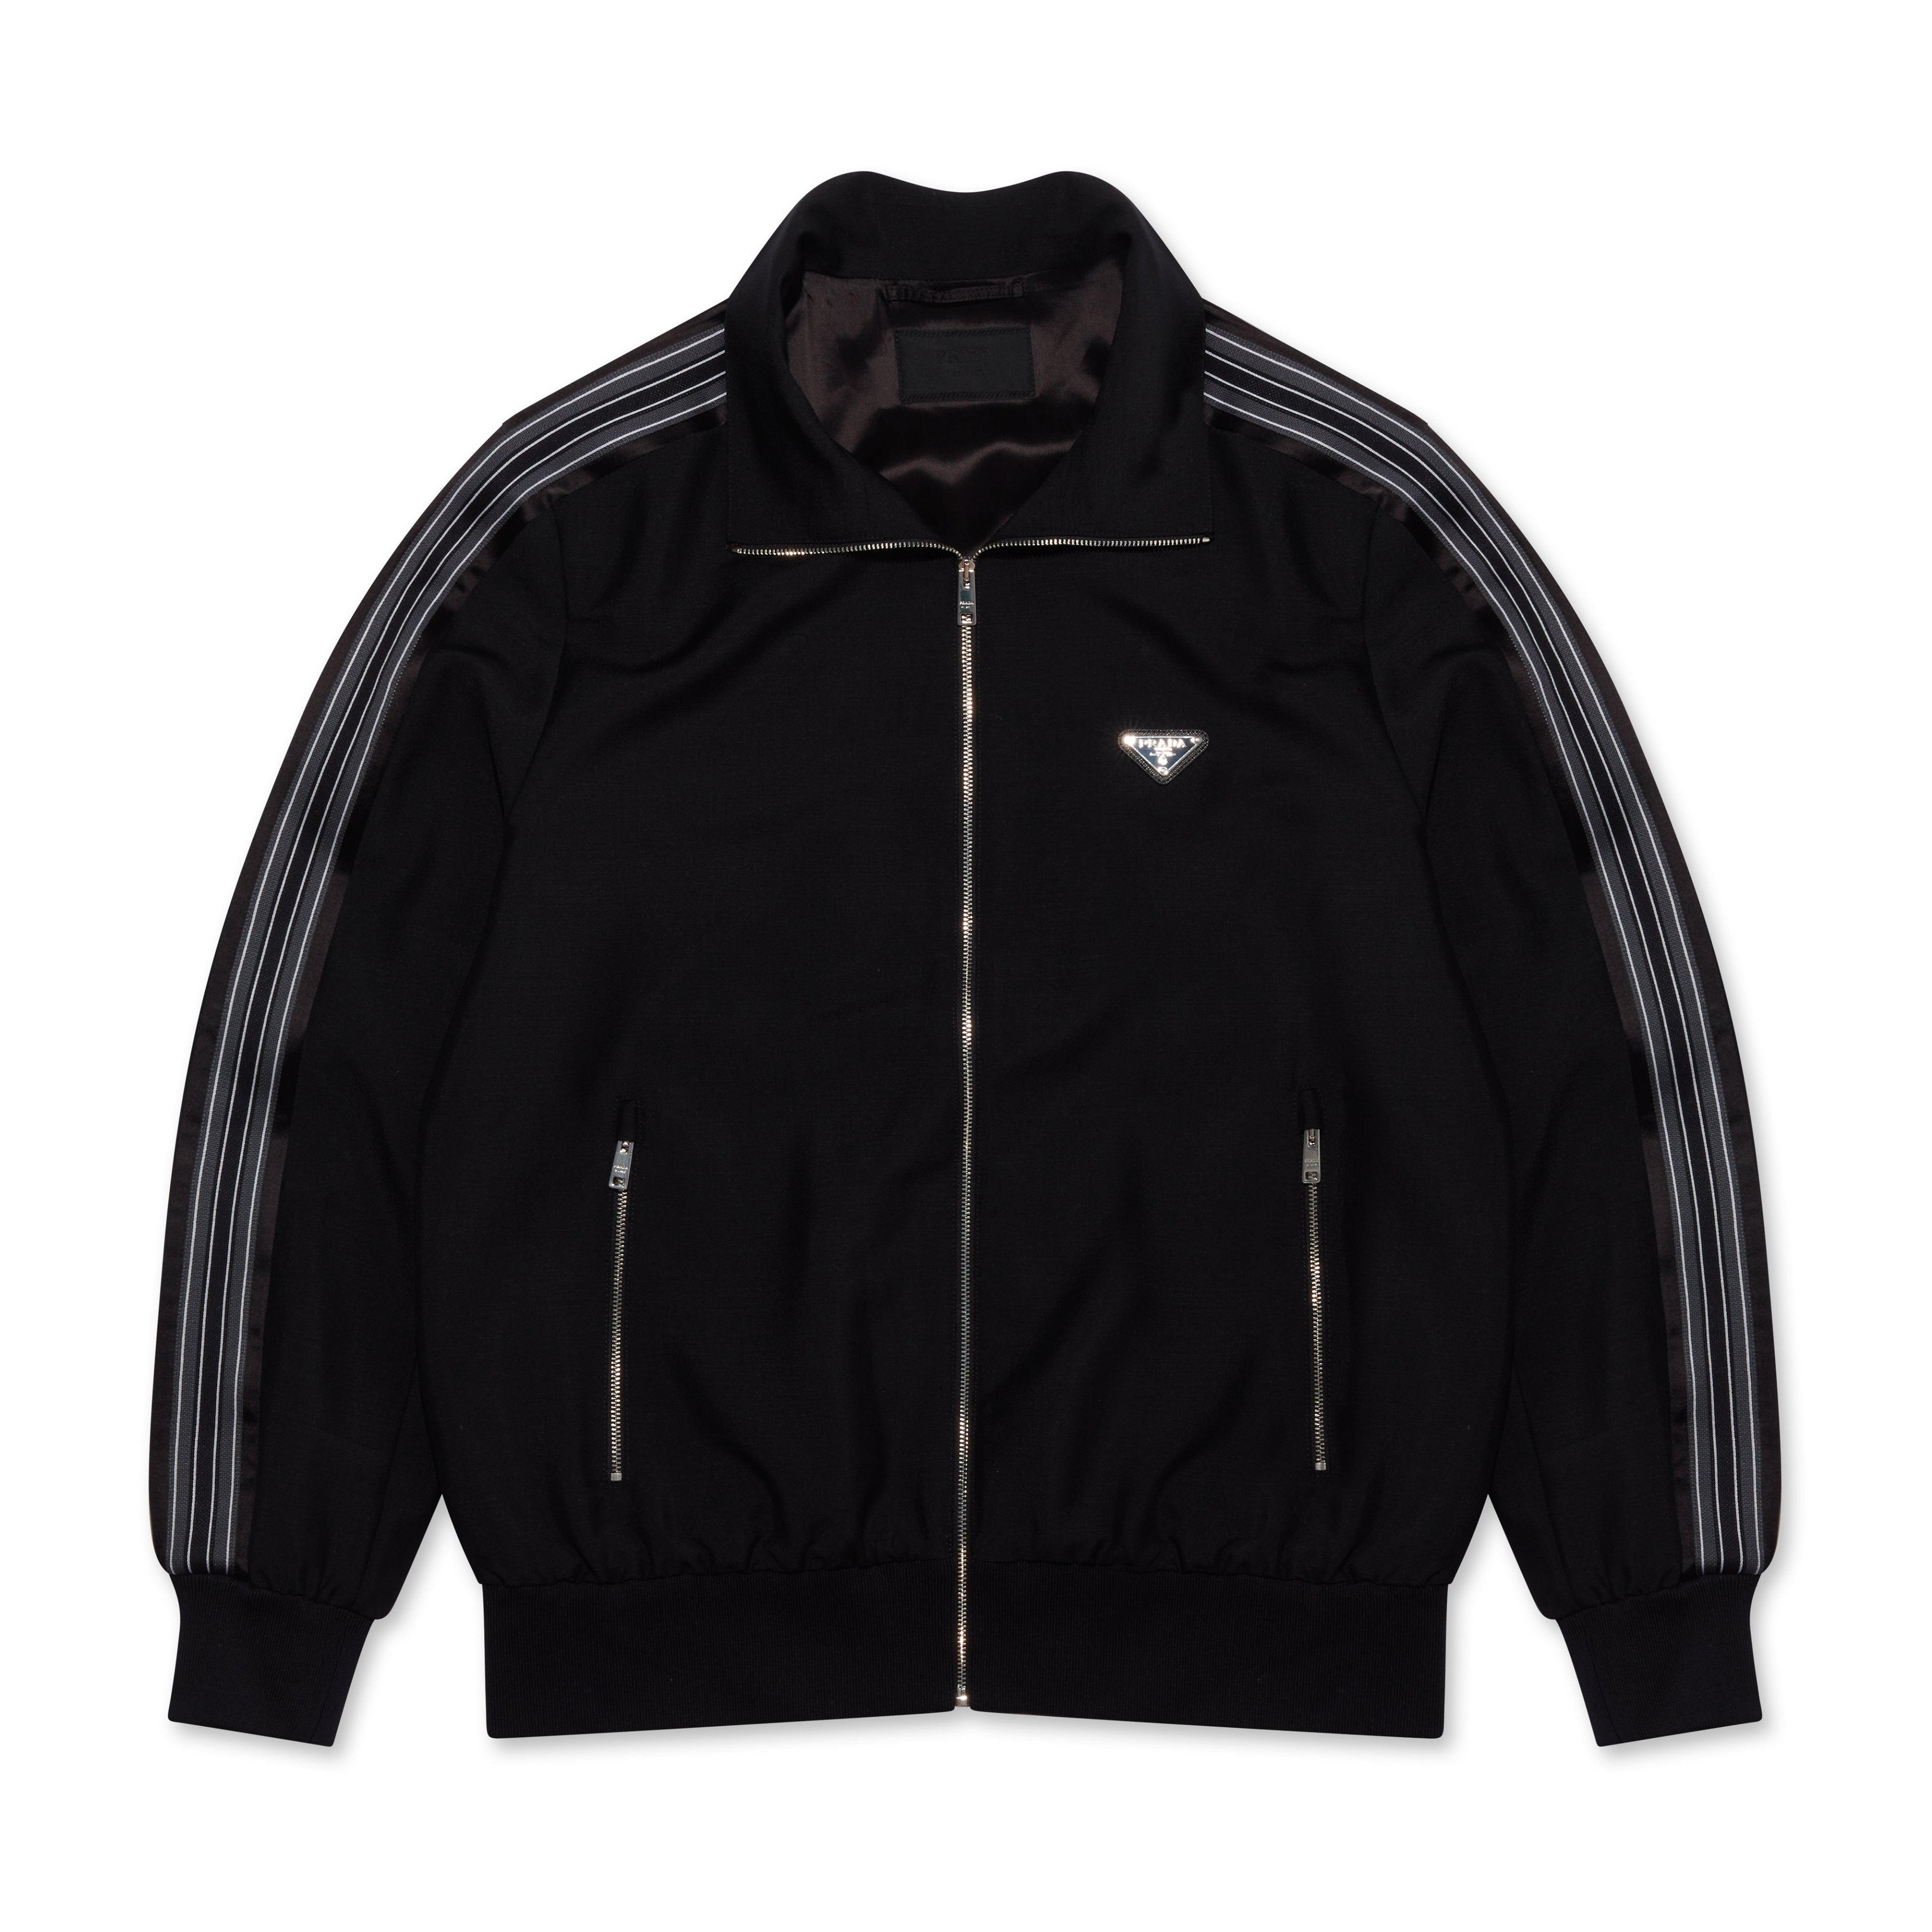 Prada - Men’s Zip Up Jacket - (Black) by PRADA